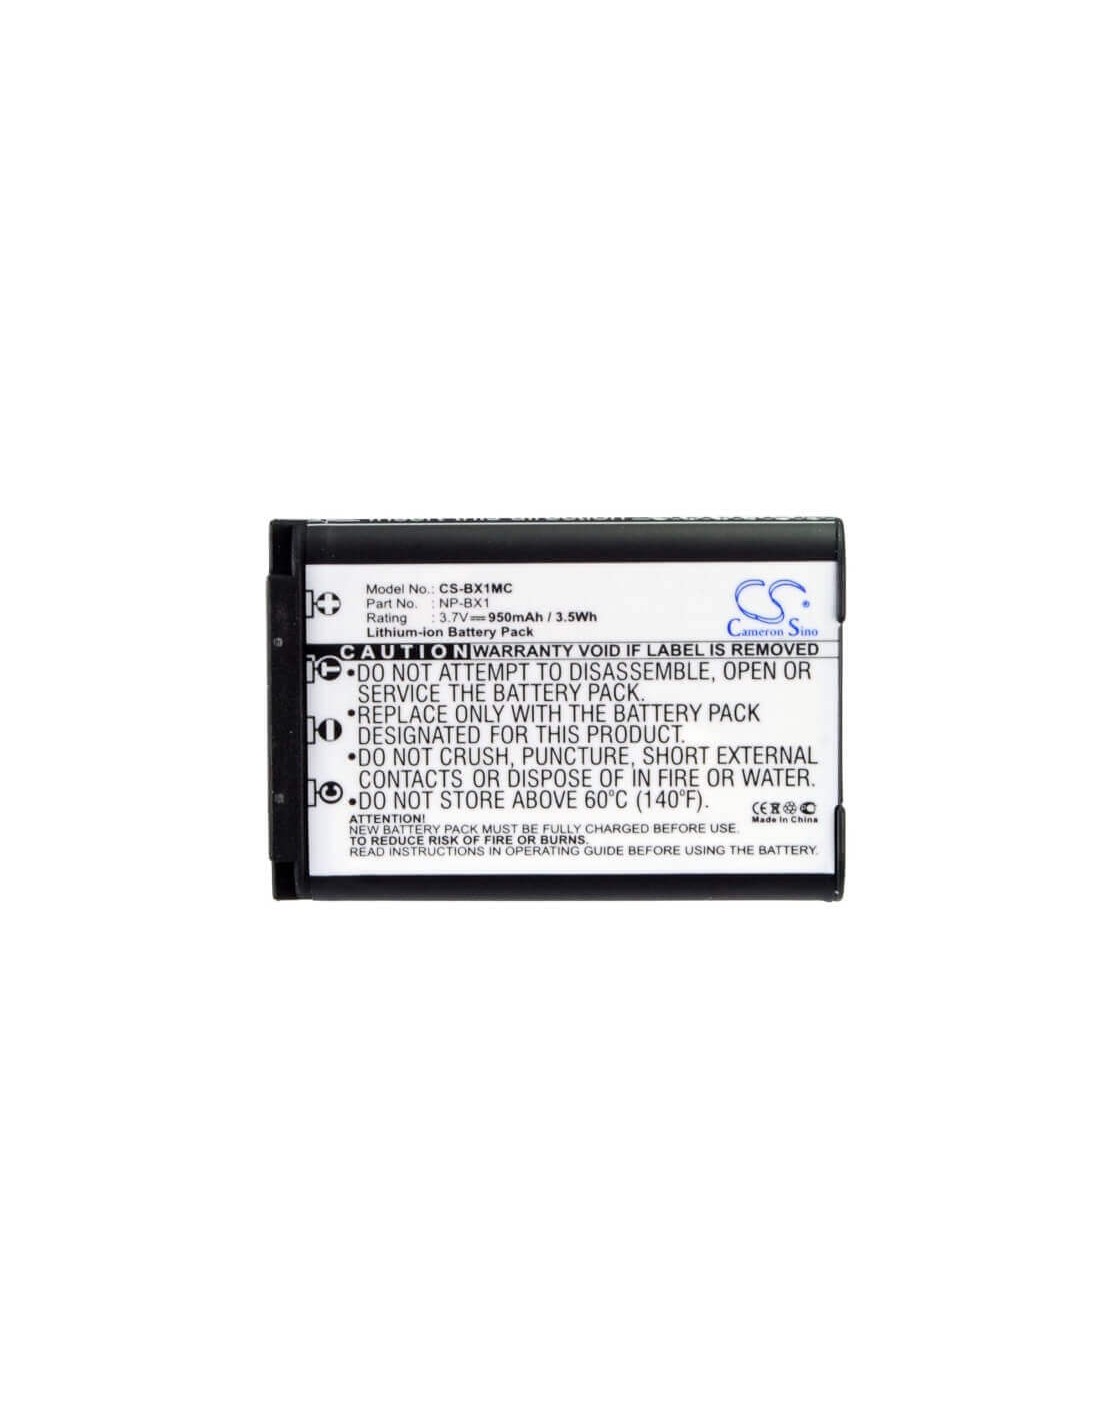 Battery for Sony Cyber-shot Dsc-hx300, Cyber-shot Dsc-hx50, 3.7V, 950mAh - 3.52Wh